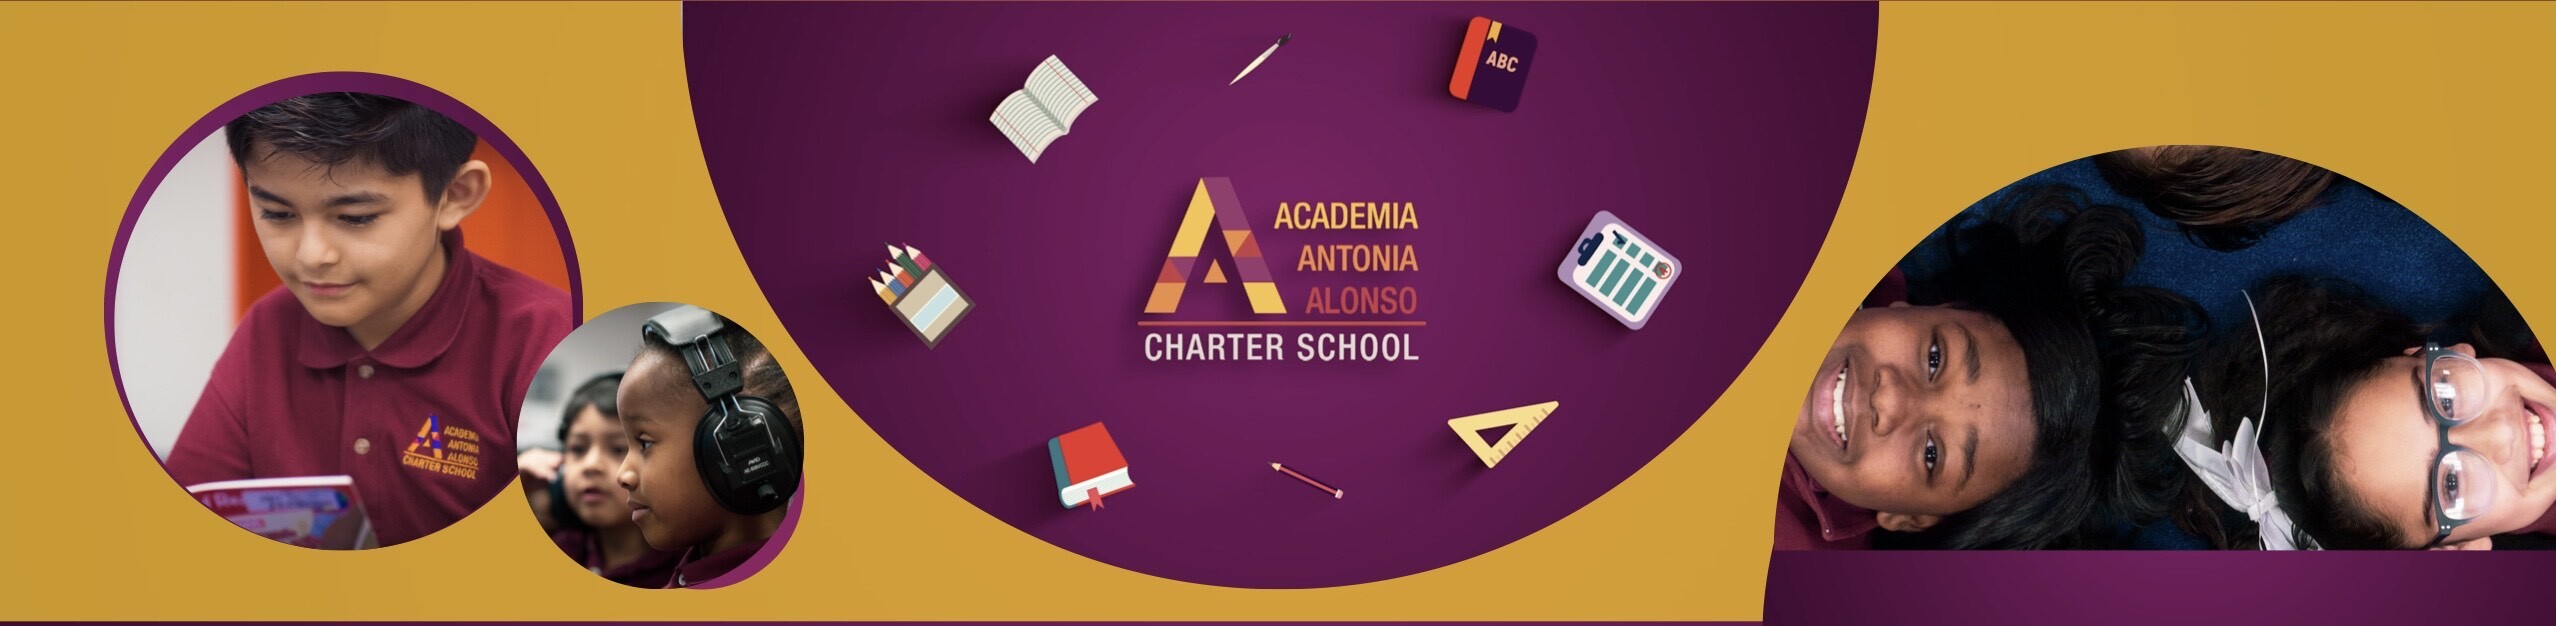 Academia Antonia Alonso Charter School Linkedin